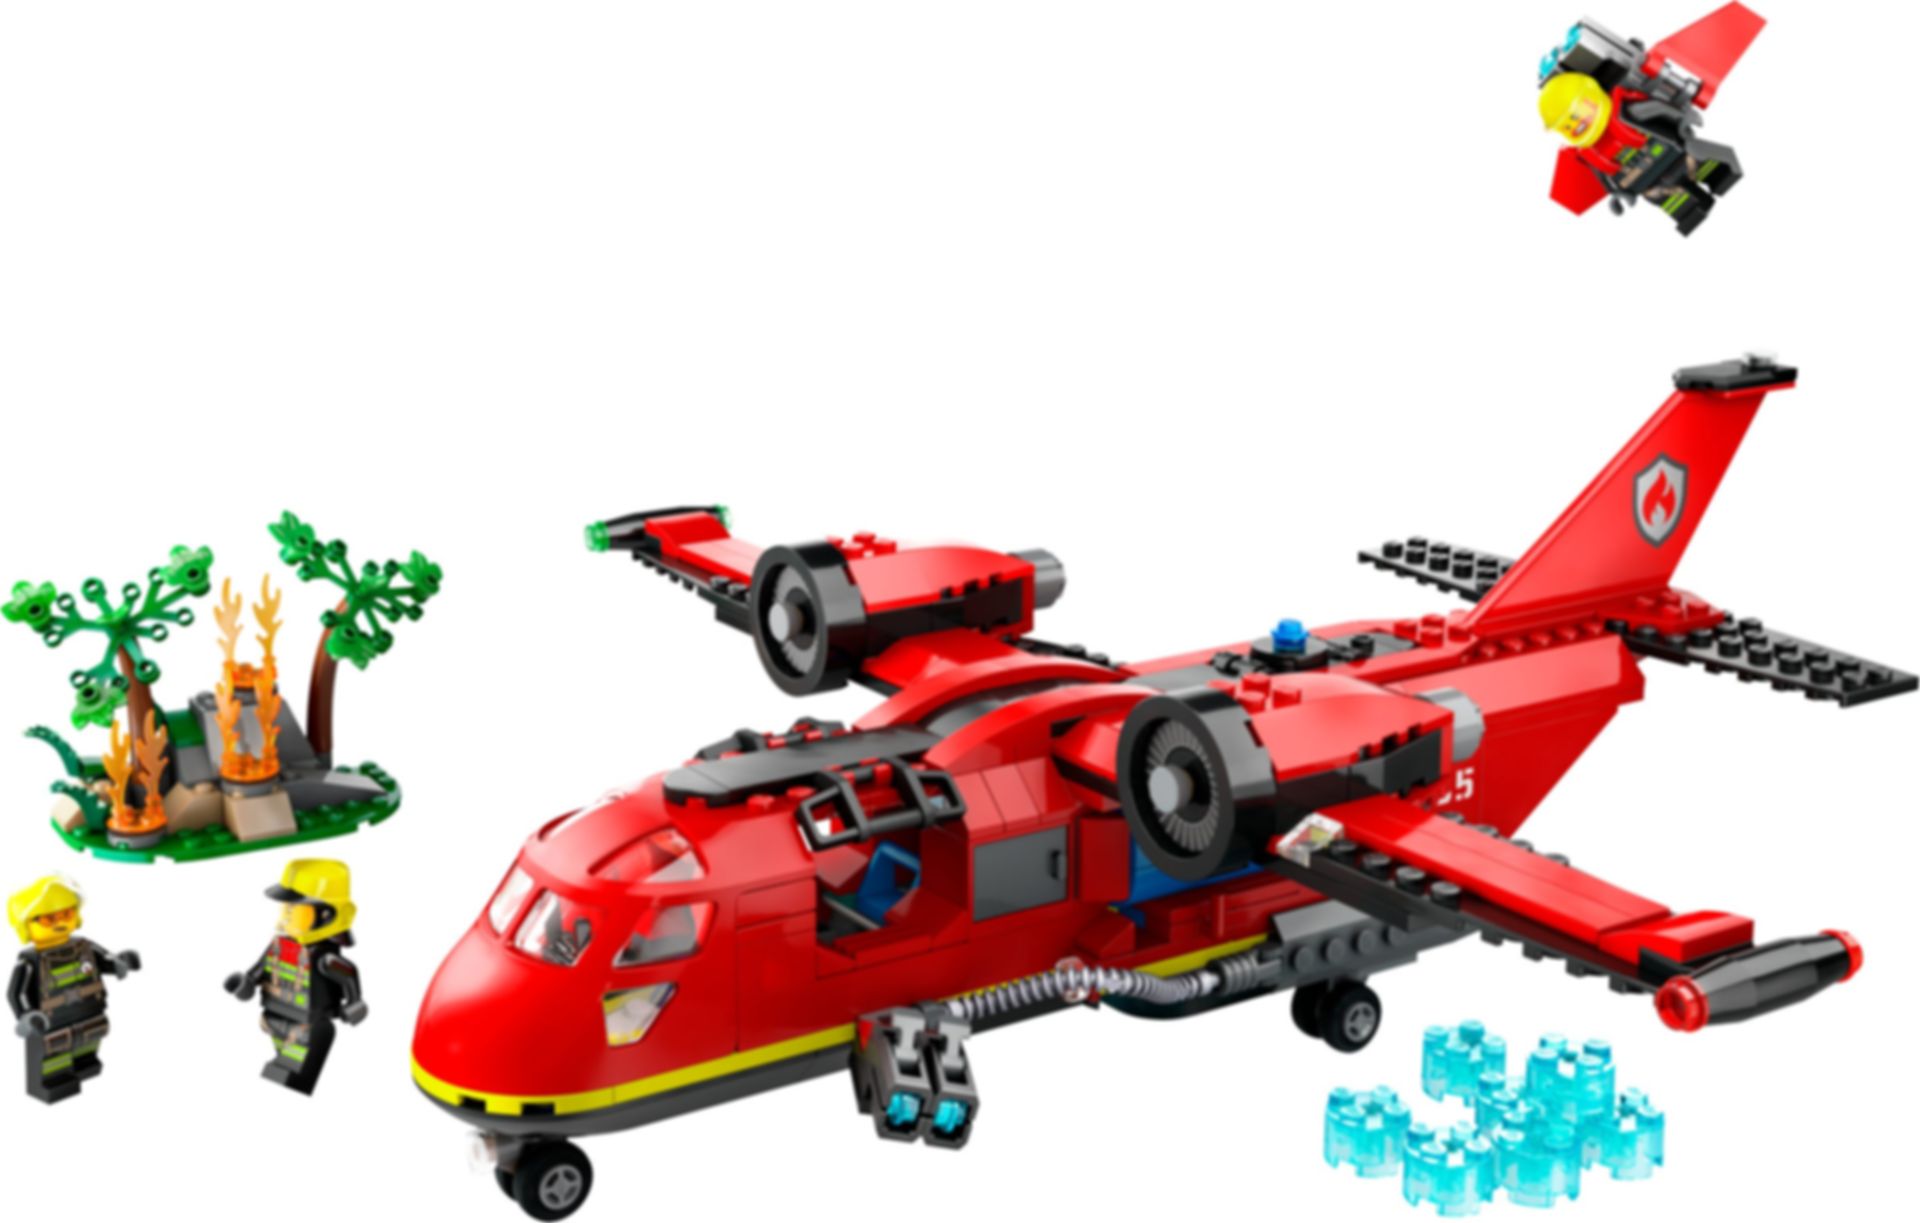 LEGO® City Fire Rescue Plane components